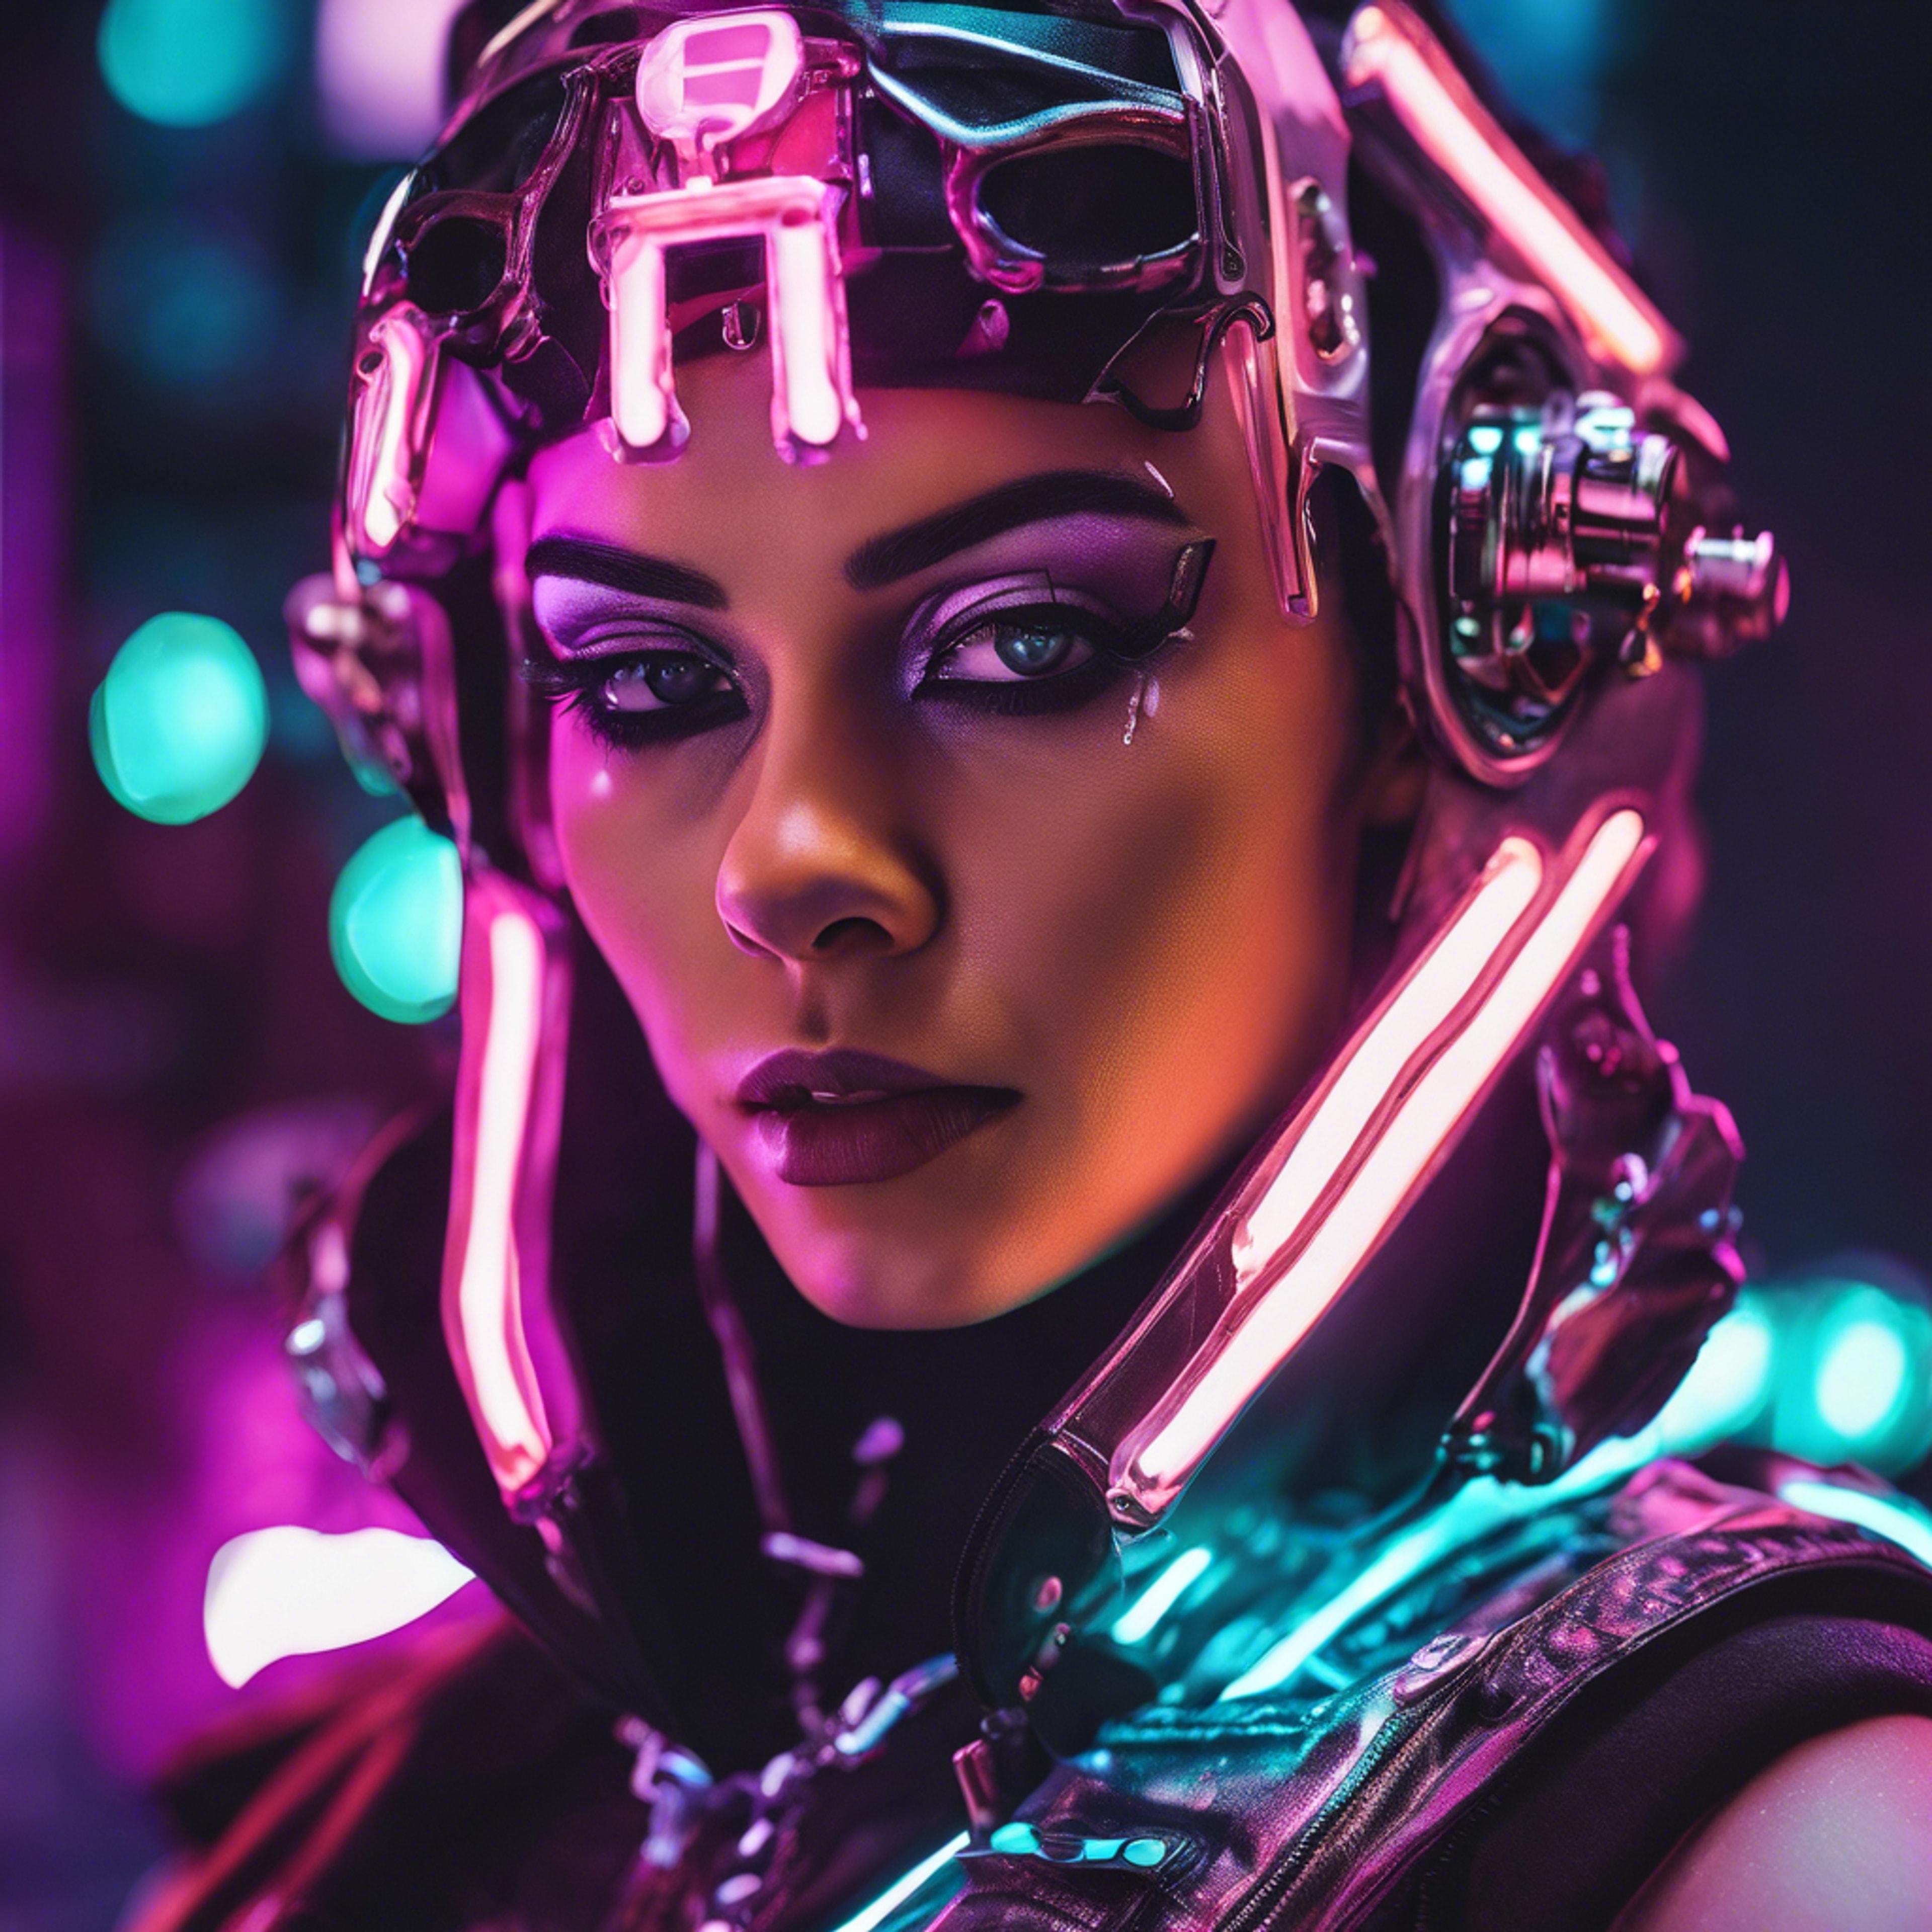 A close-up portrait of a cyberpunk baddie in neon lighting, metal piercings, and sci-fi-inspired makeup. Hình nền[9ac0123c92044077bebc]